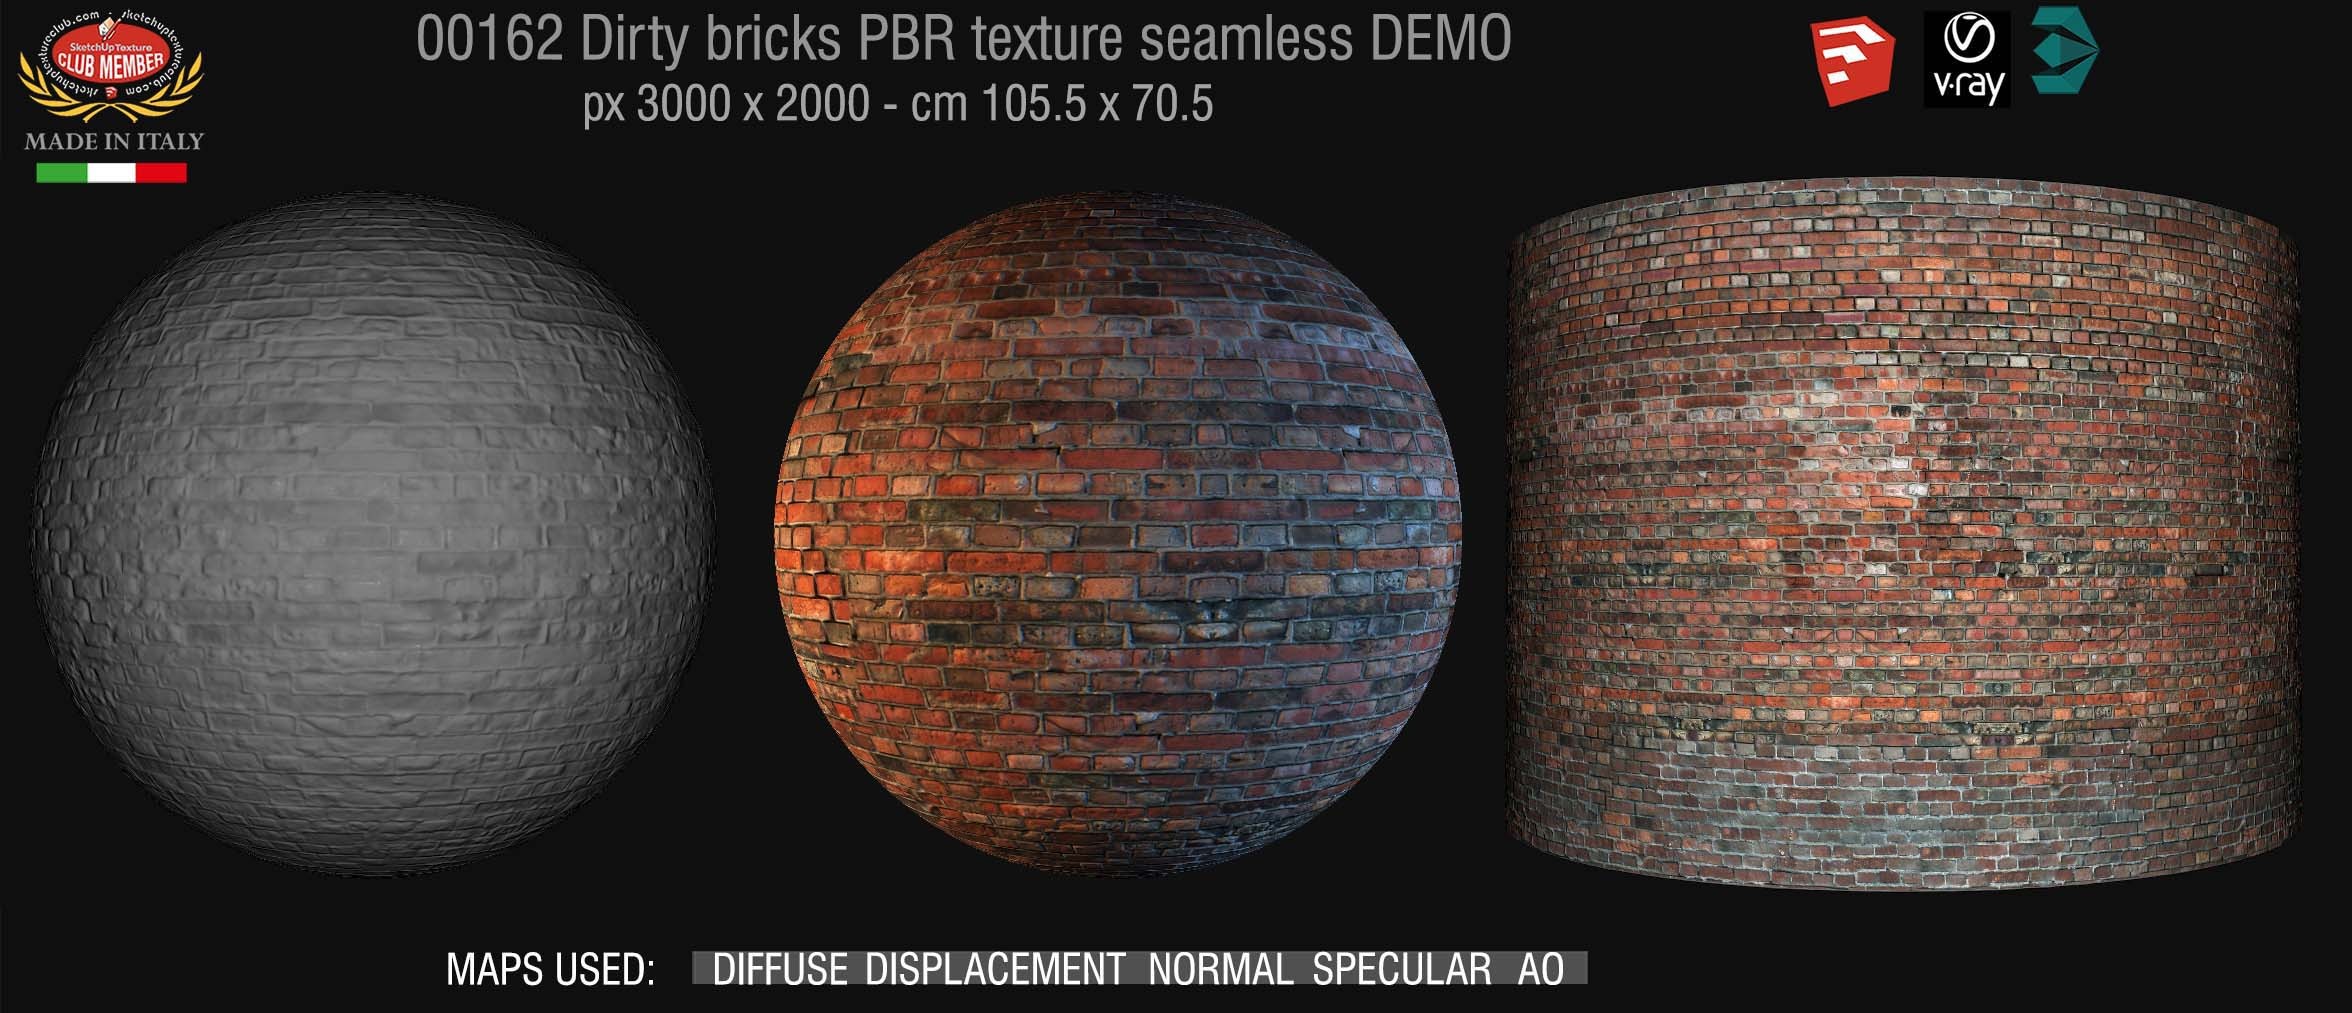 00162 Dirty bricks PBR texture seamless DEMO